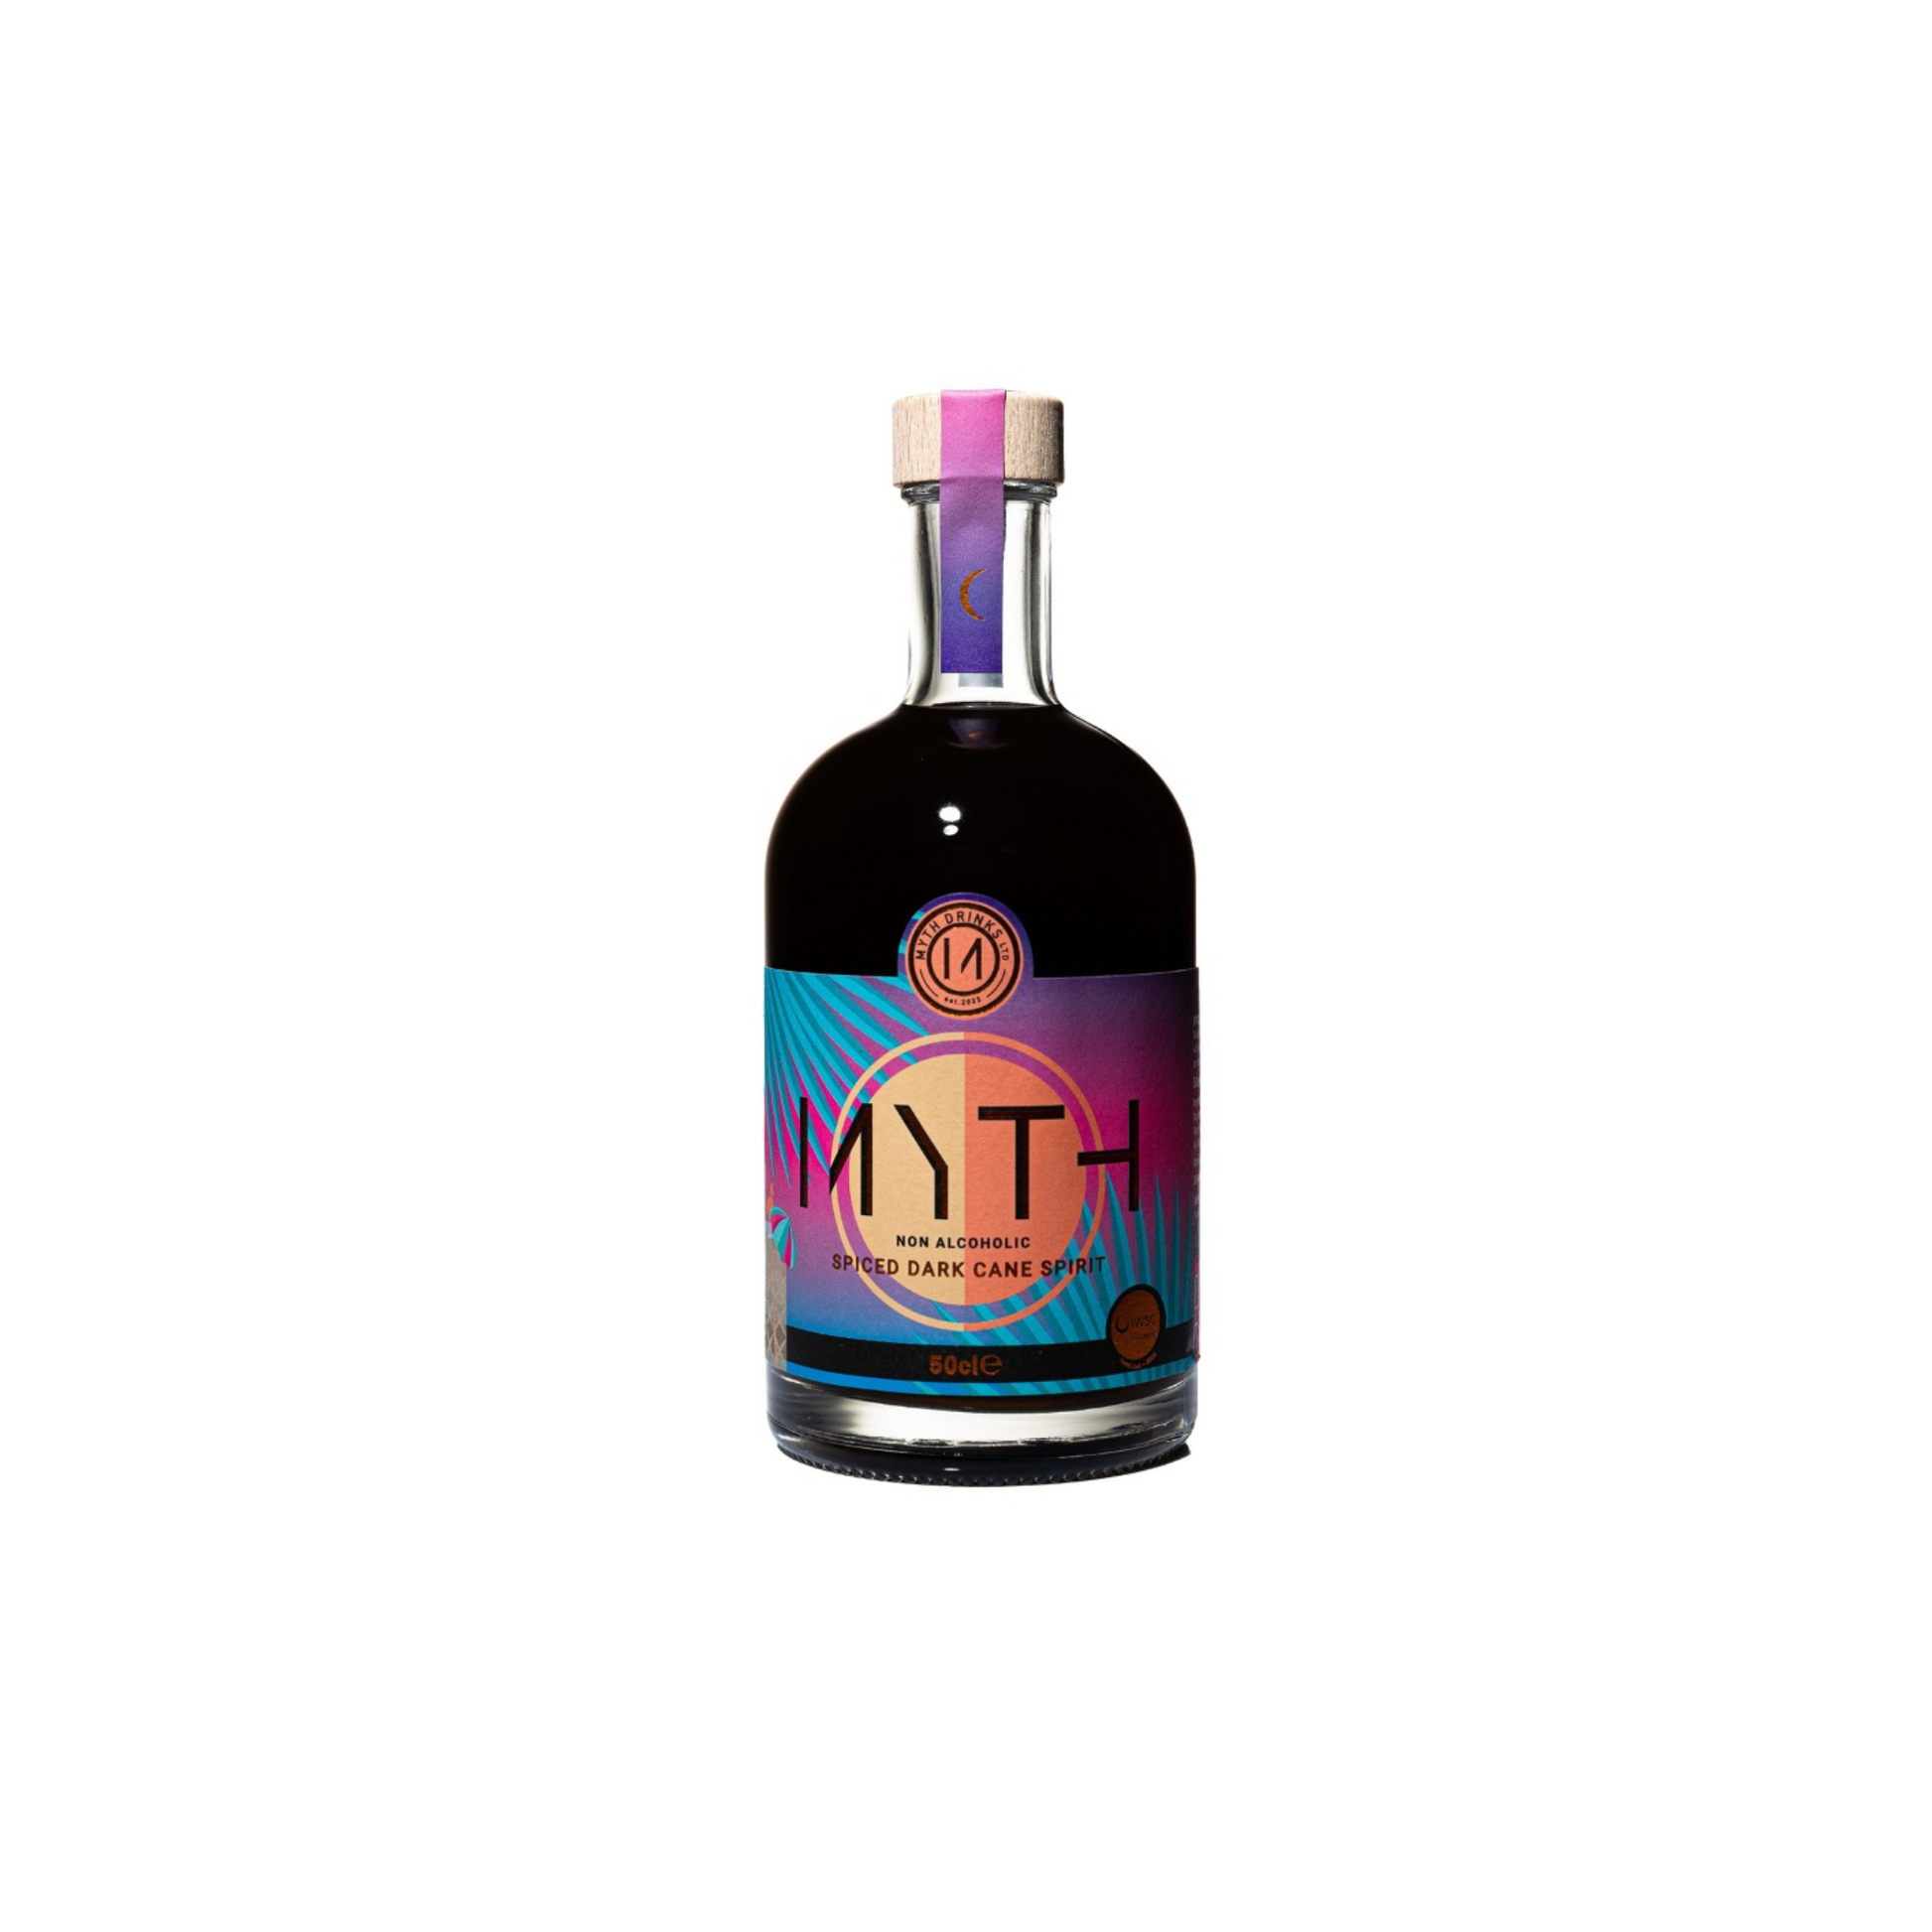 Myth Non-Alcoholic Spiced Dark Cane Spirit Rum